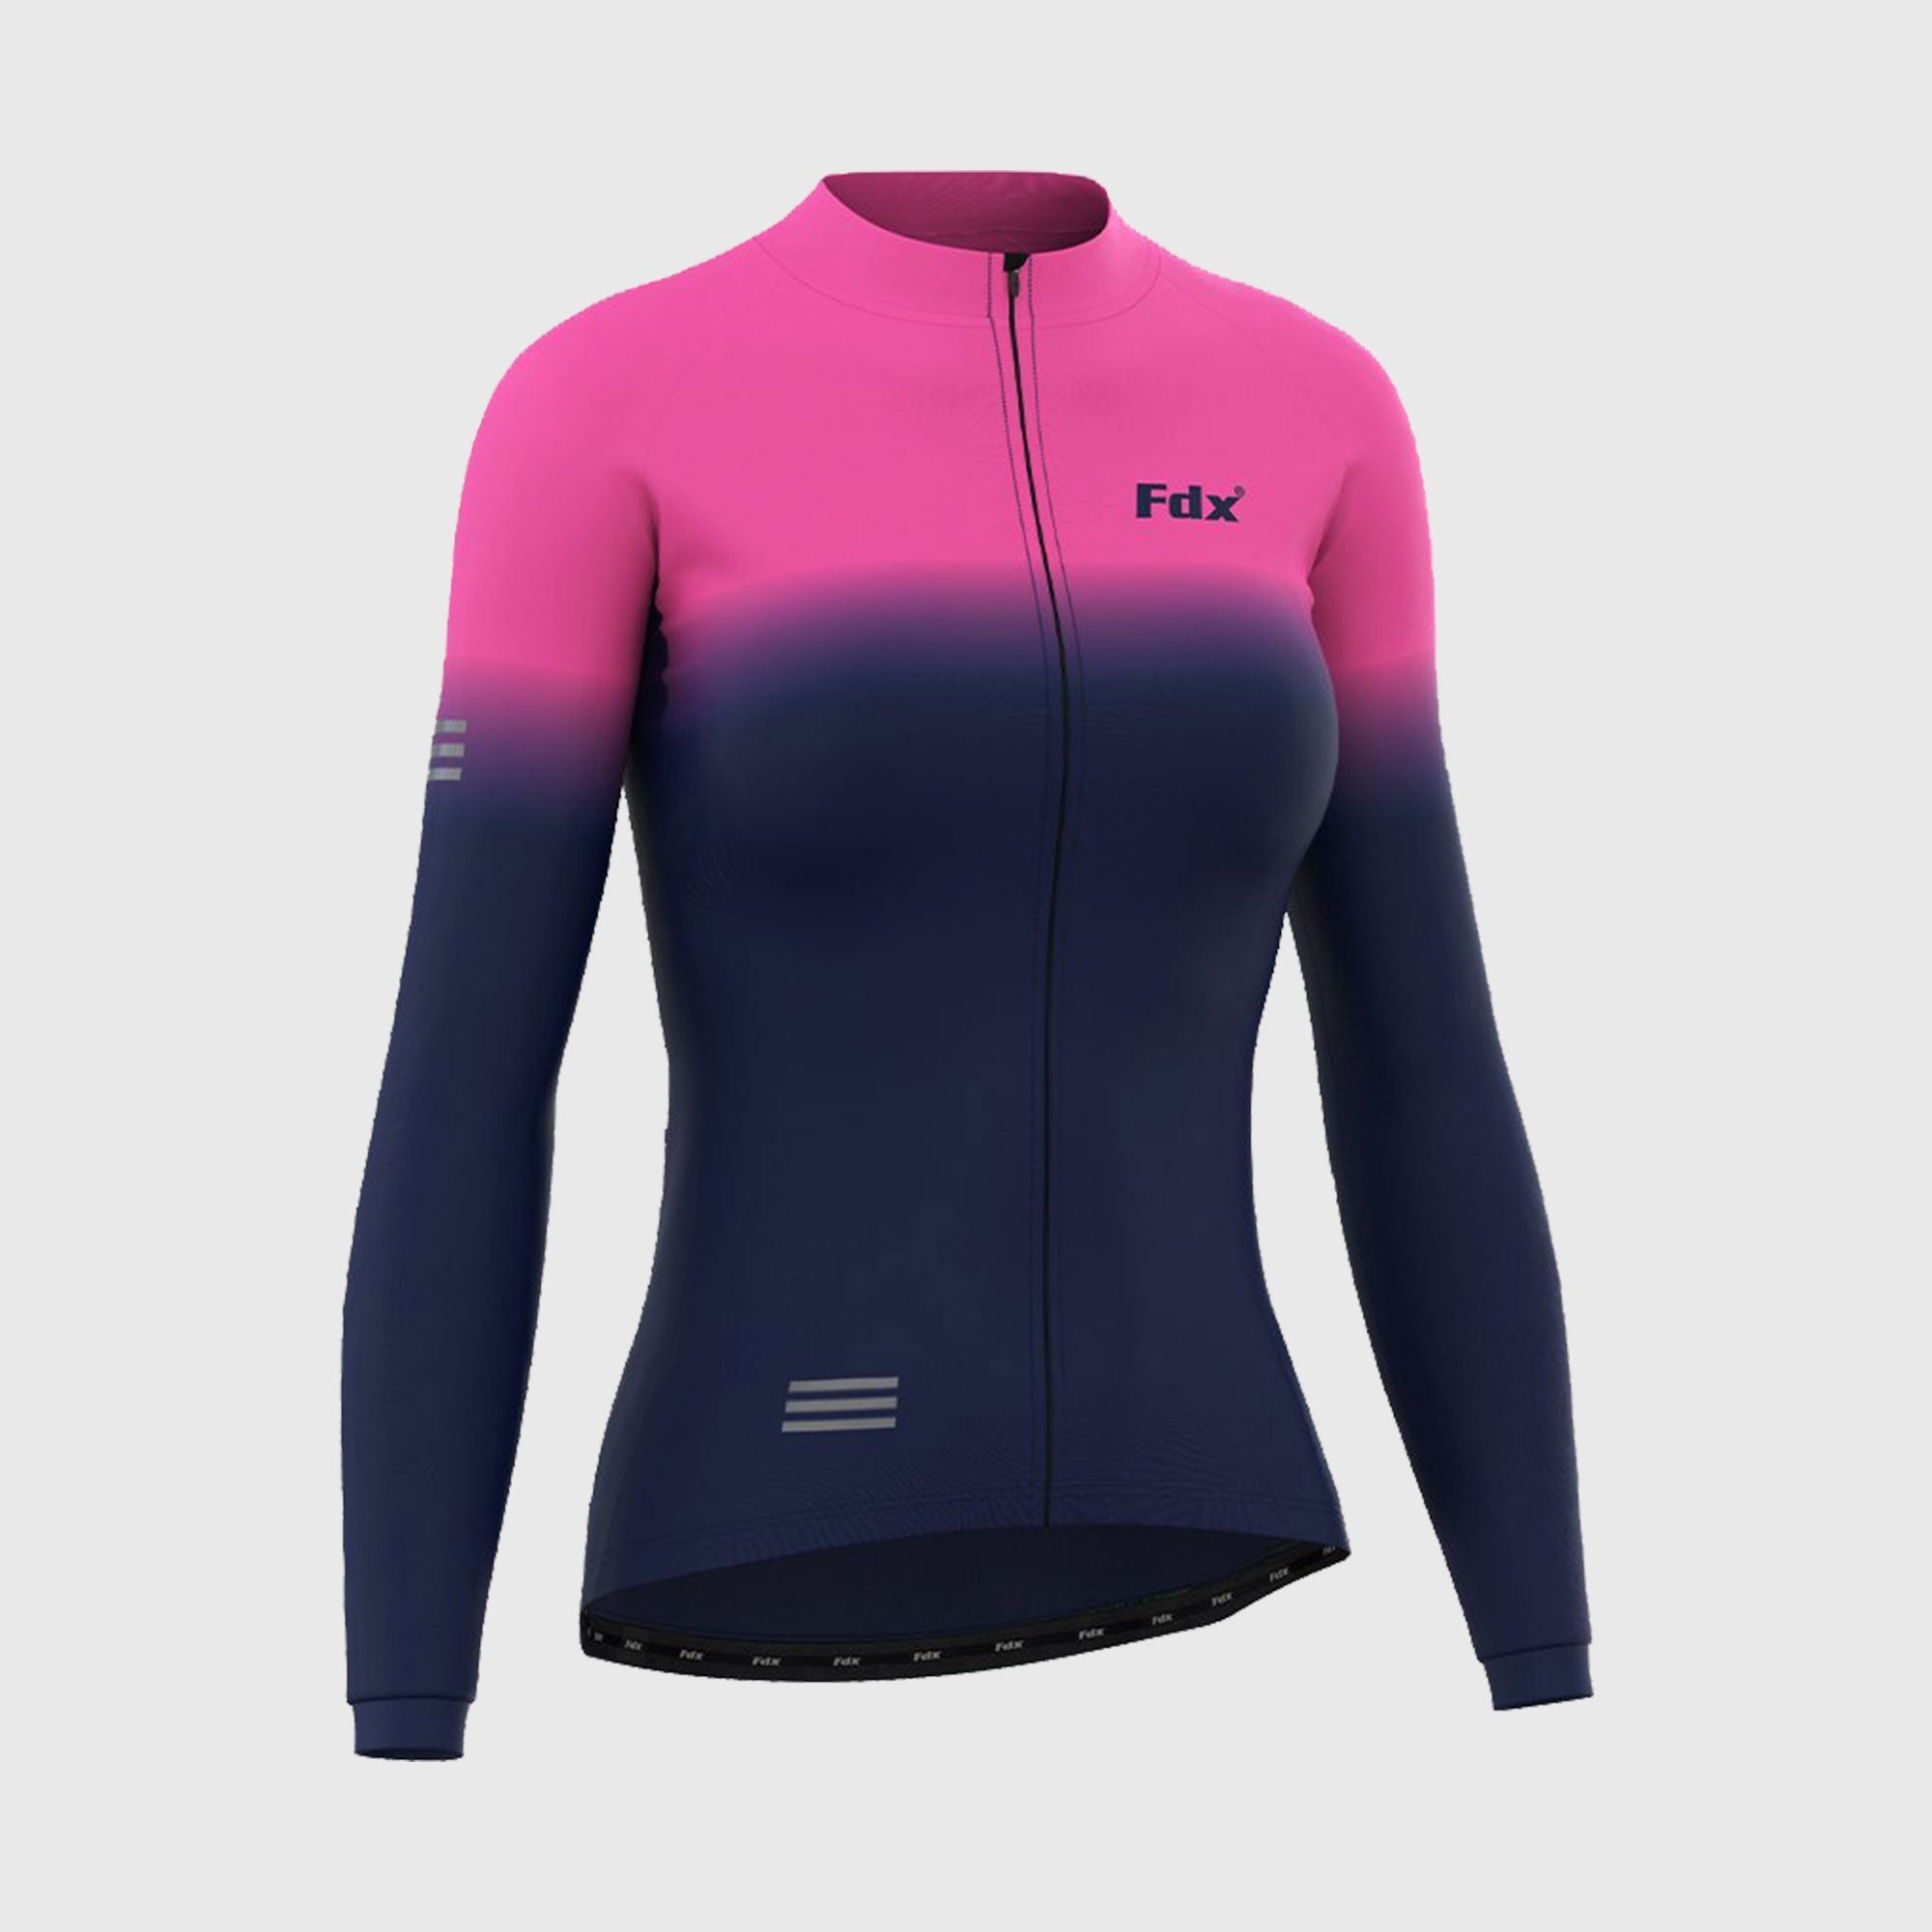 Fdx Duo Women's Pink / Blue Long Sleeve Winter Cycling Jersey